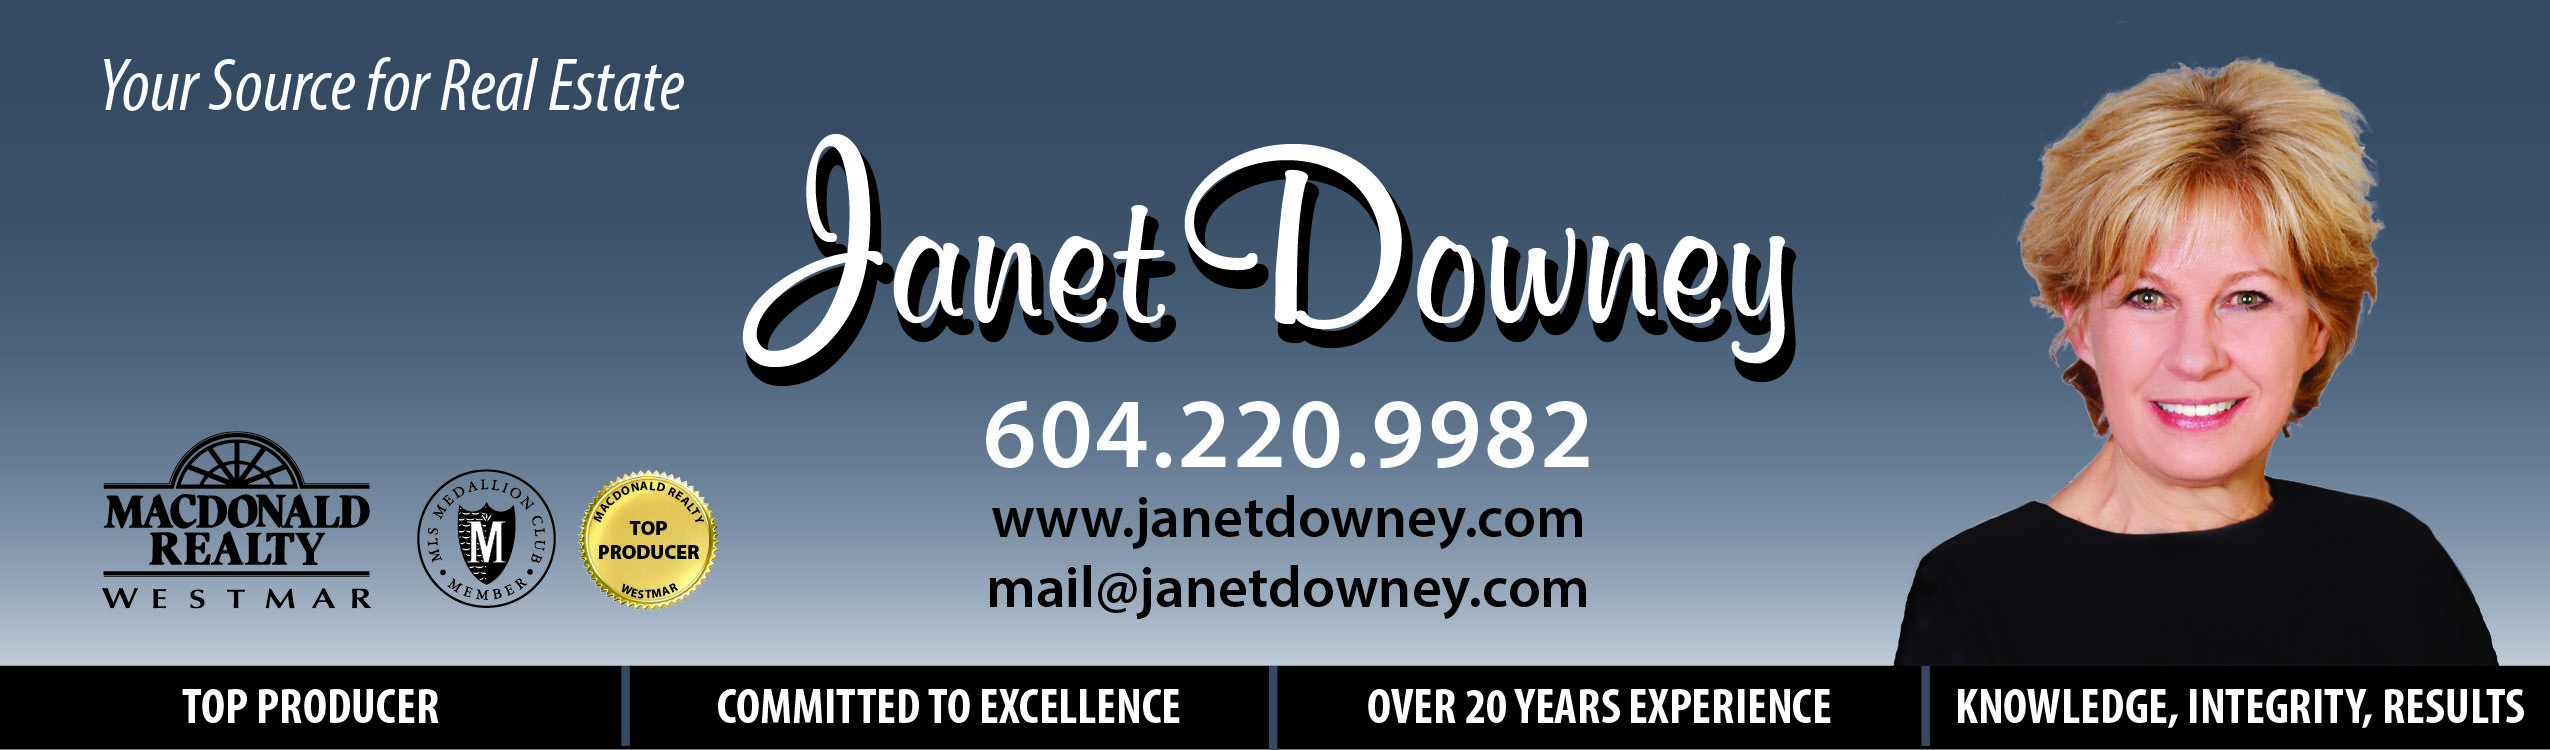 Janet Downey